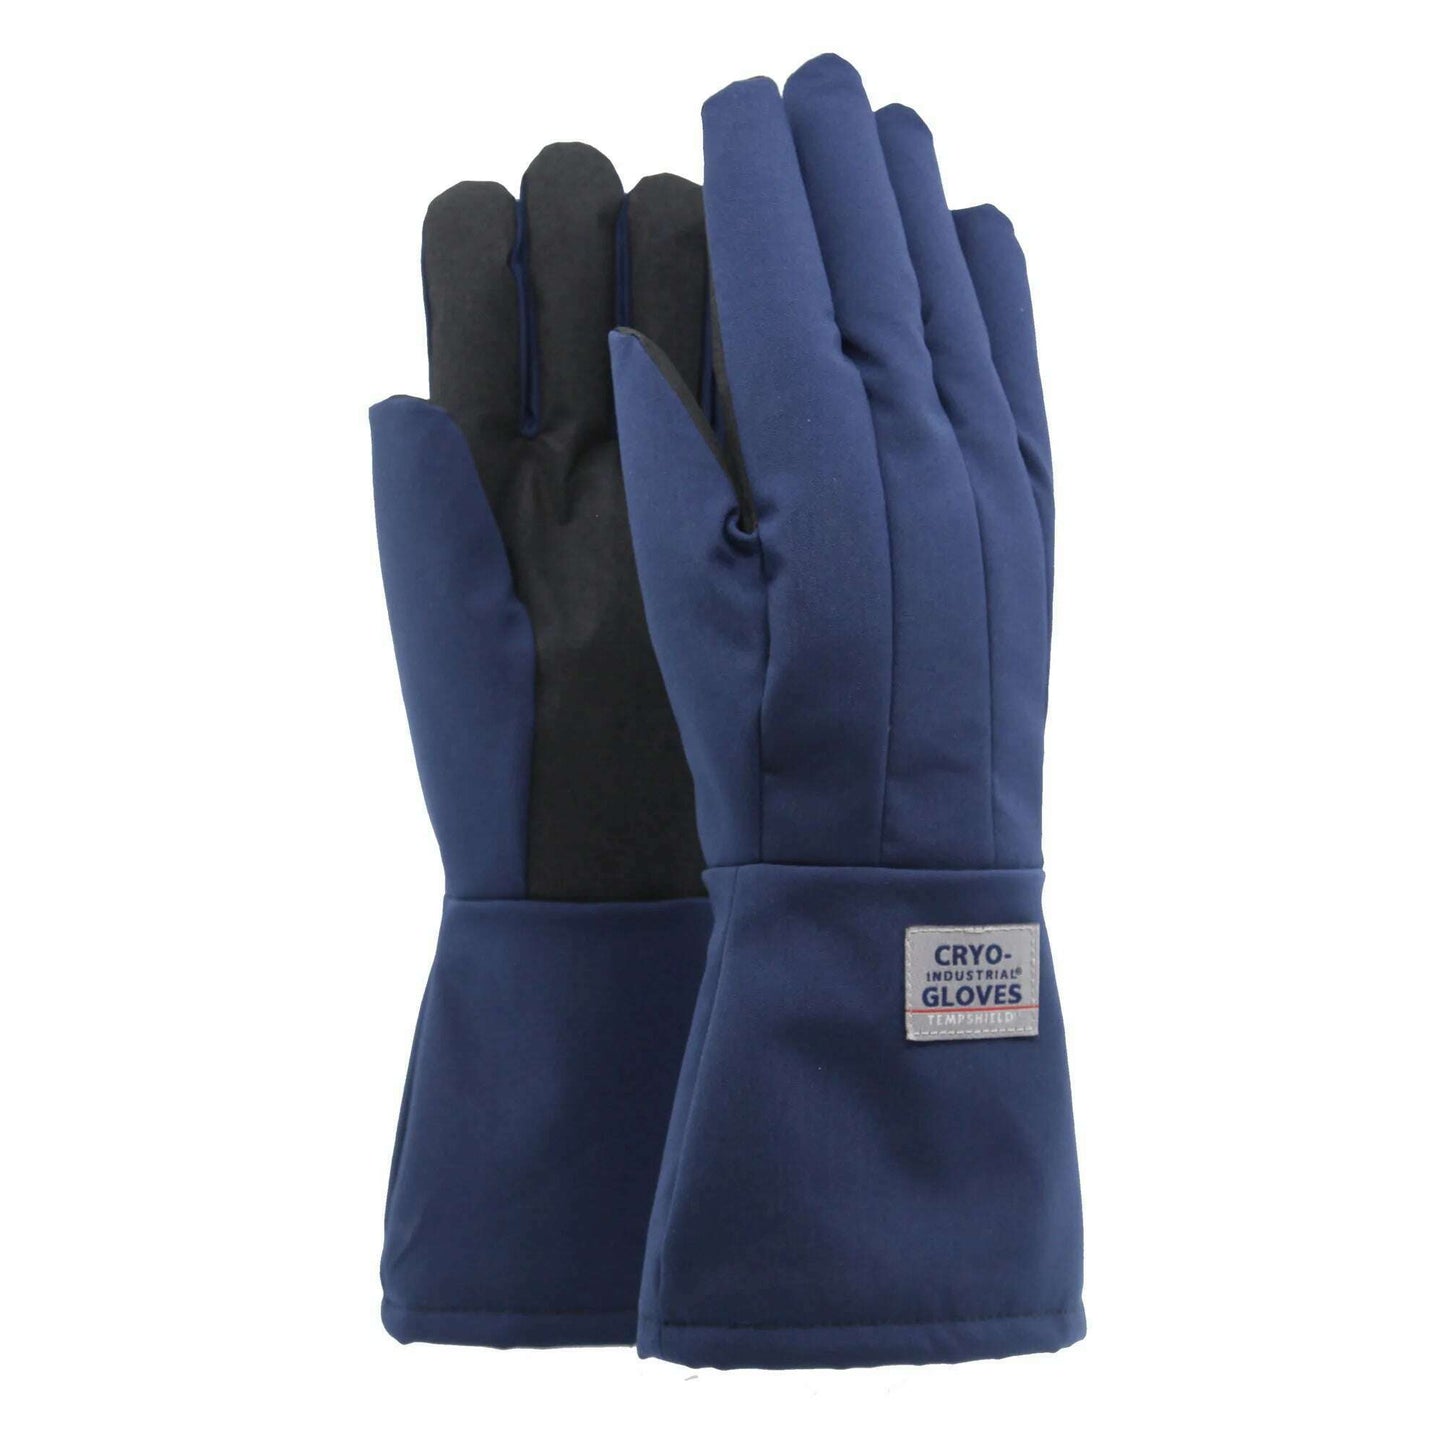 Cryo-Industrial Gloves Mid-Arm